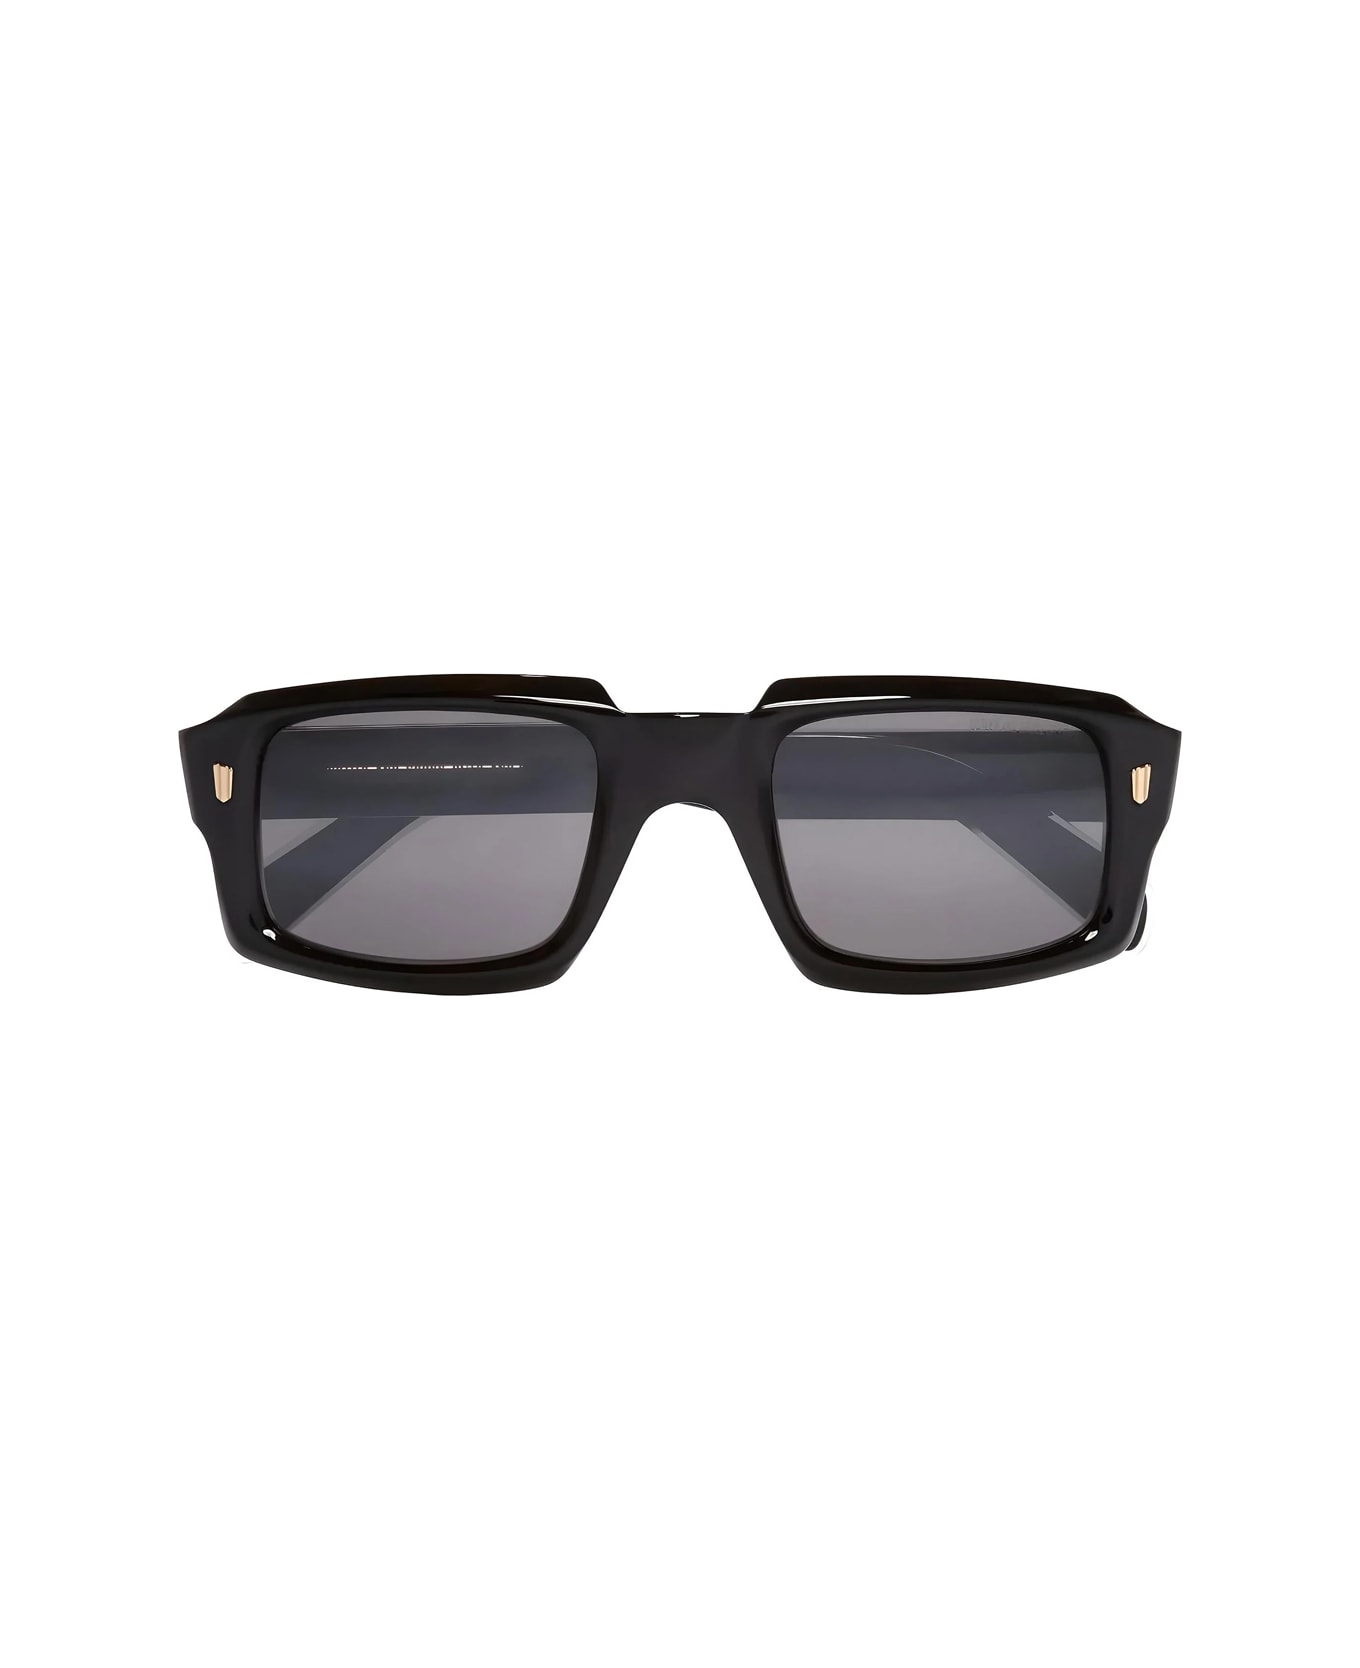 Cutler and Gross 9495 01 Black Sunglasses - Nero サングラス